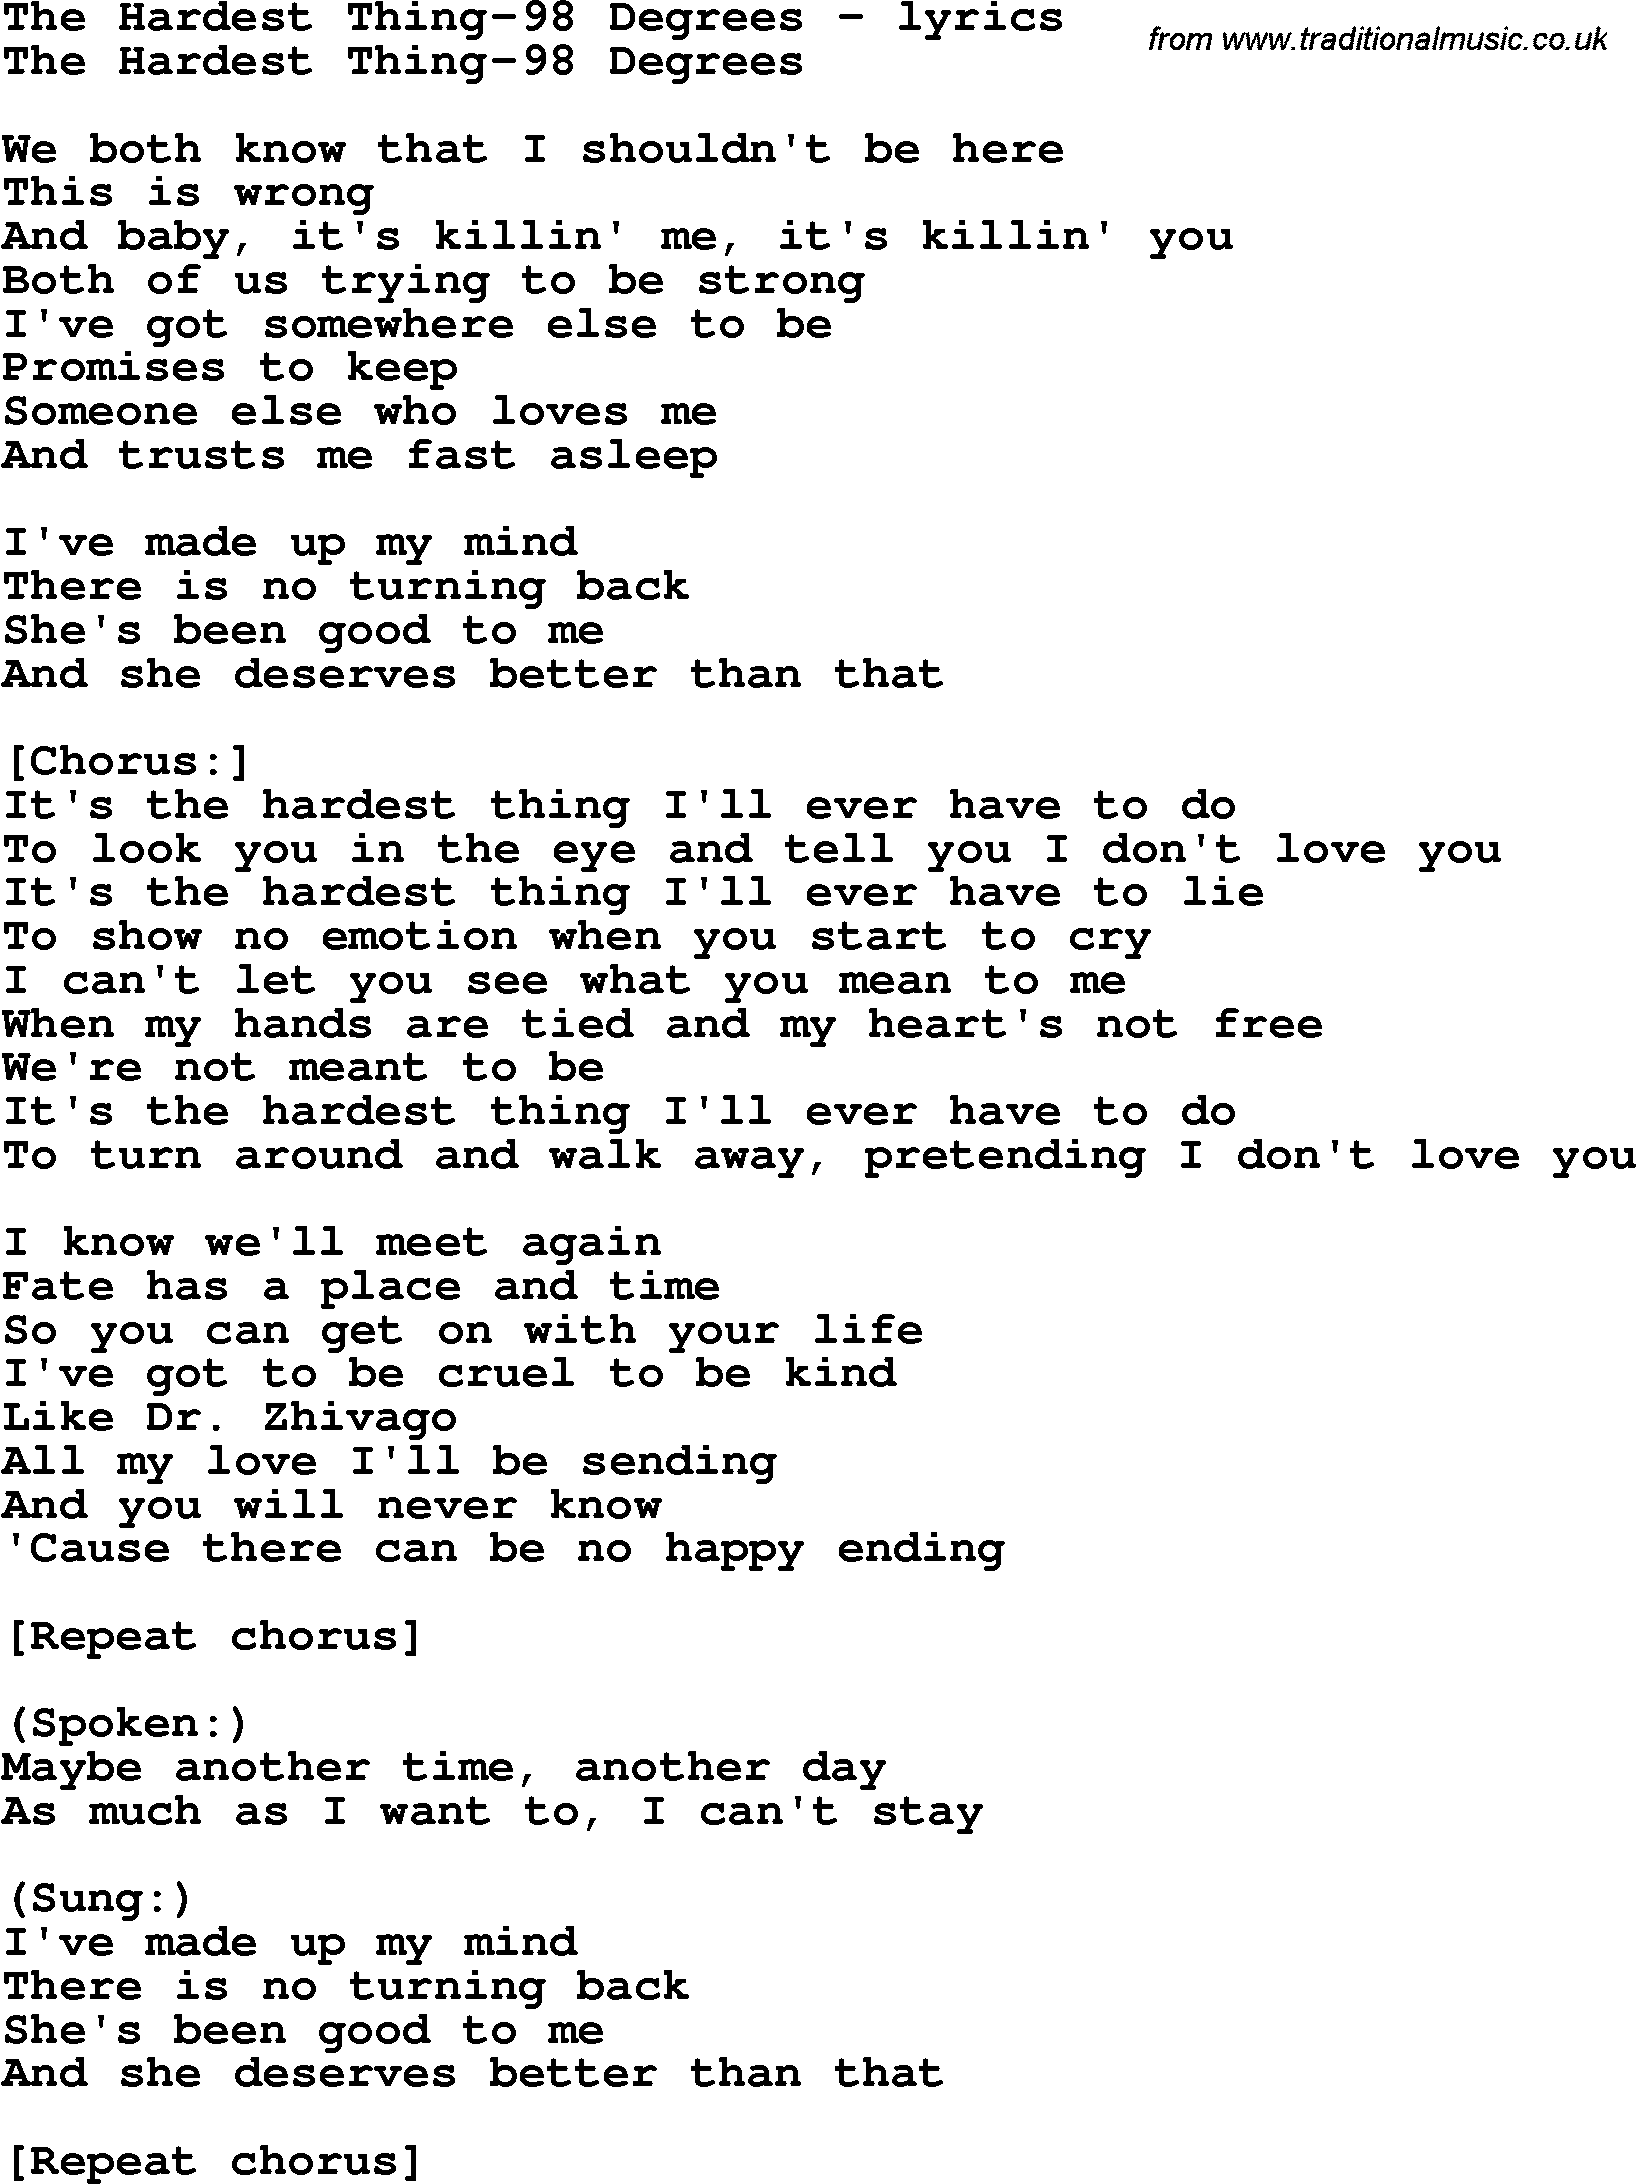 Love Song Lyrics for: The Hardest Thing-98 Degrees